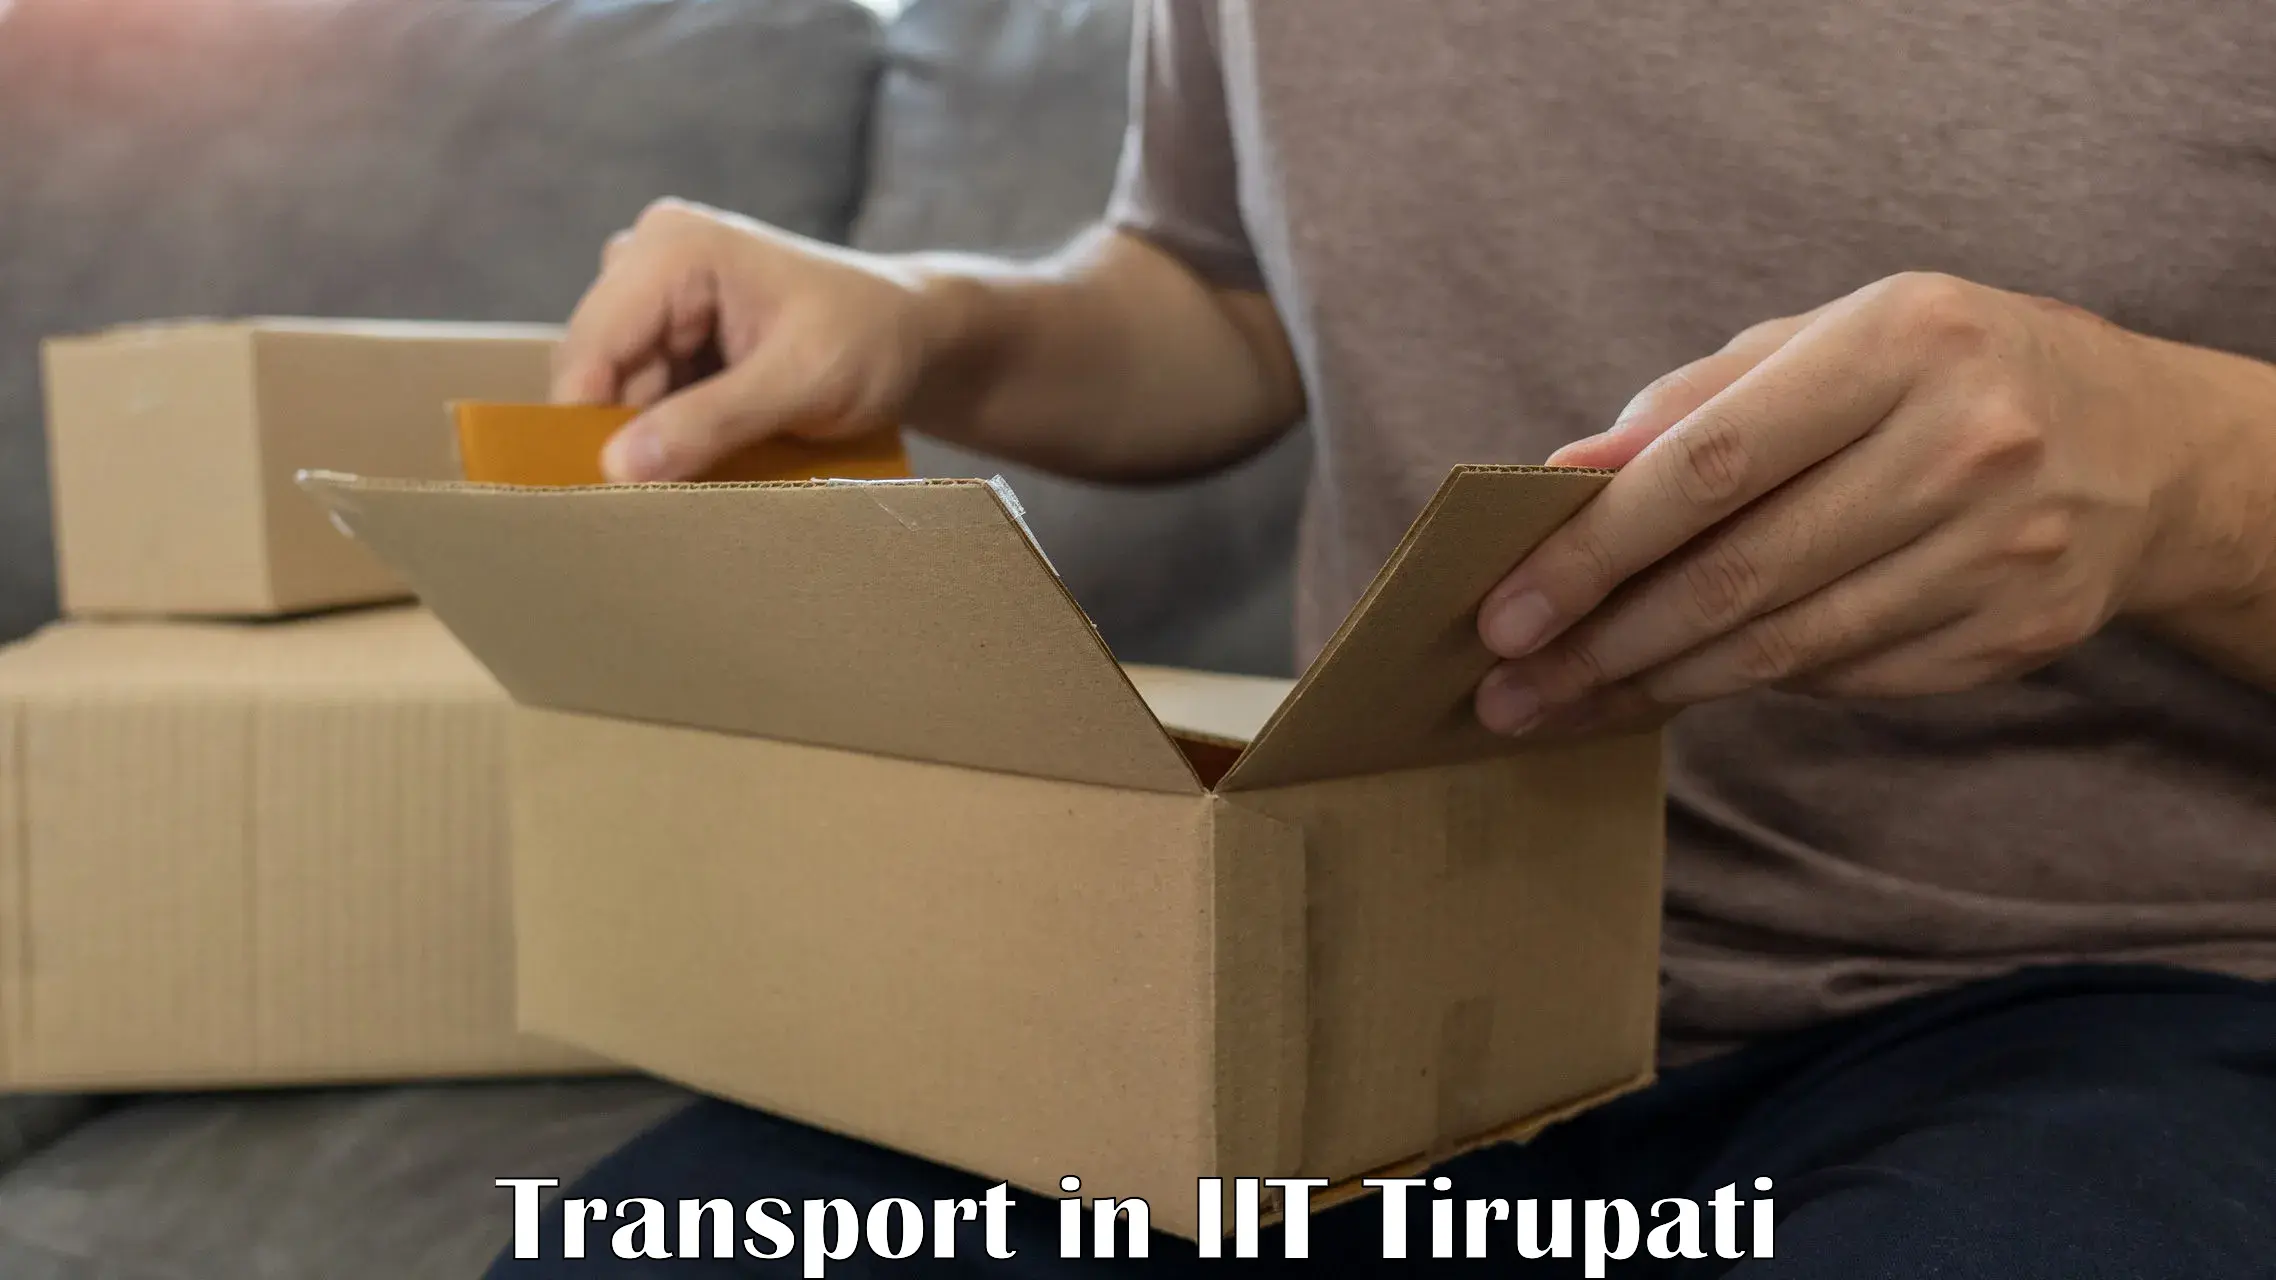 Truck transport companies in India in IIT Tirupati